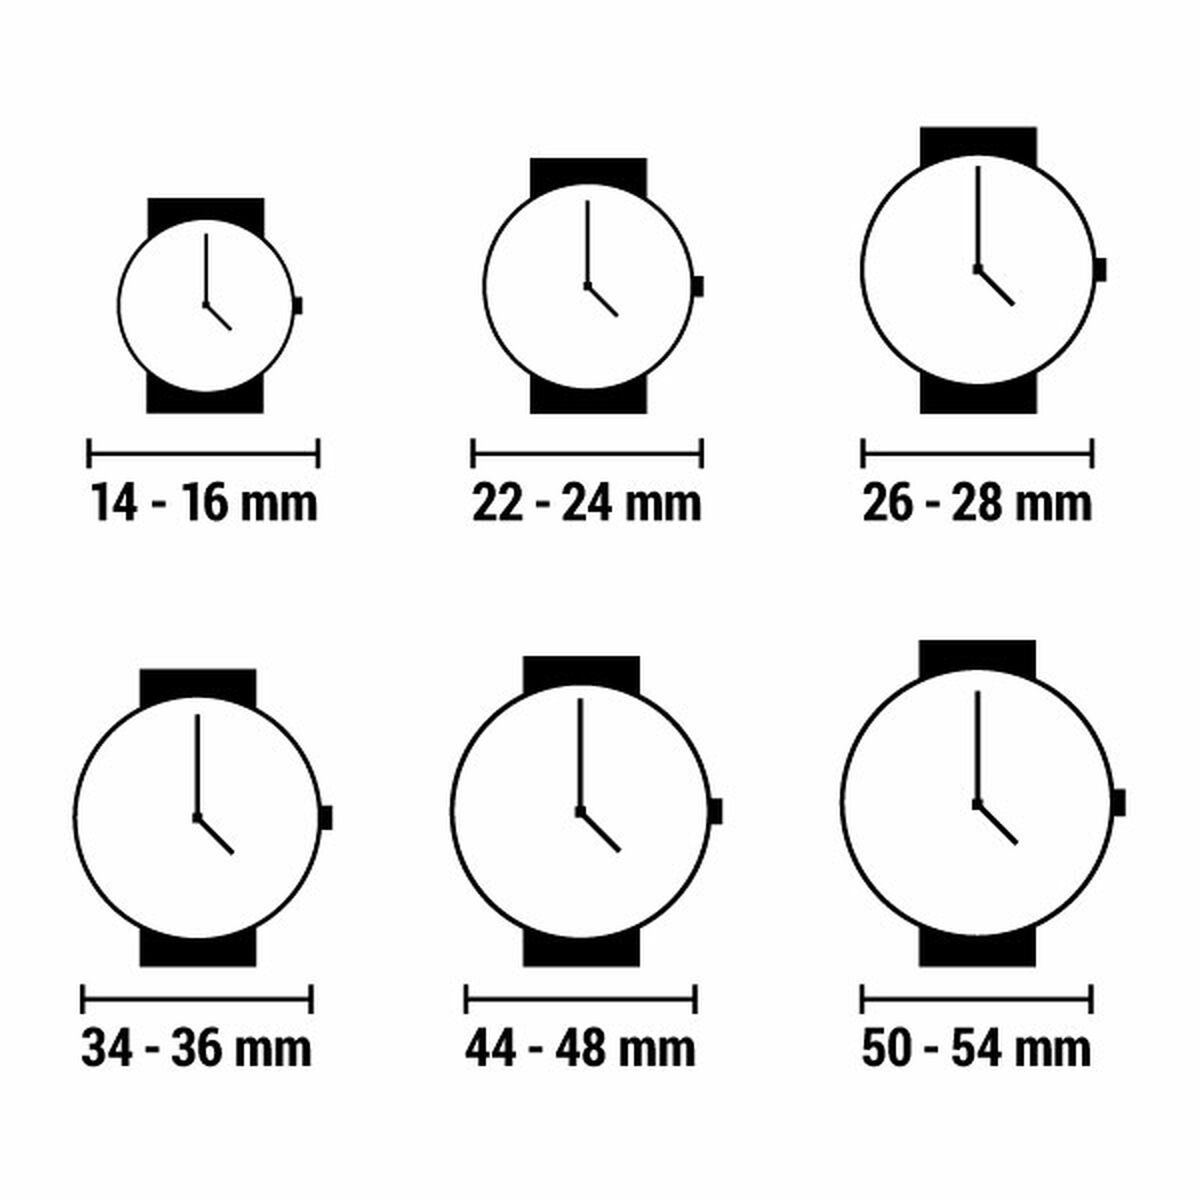 Horloge Dames Lorus R2339PX9